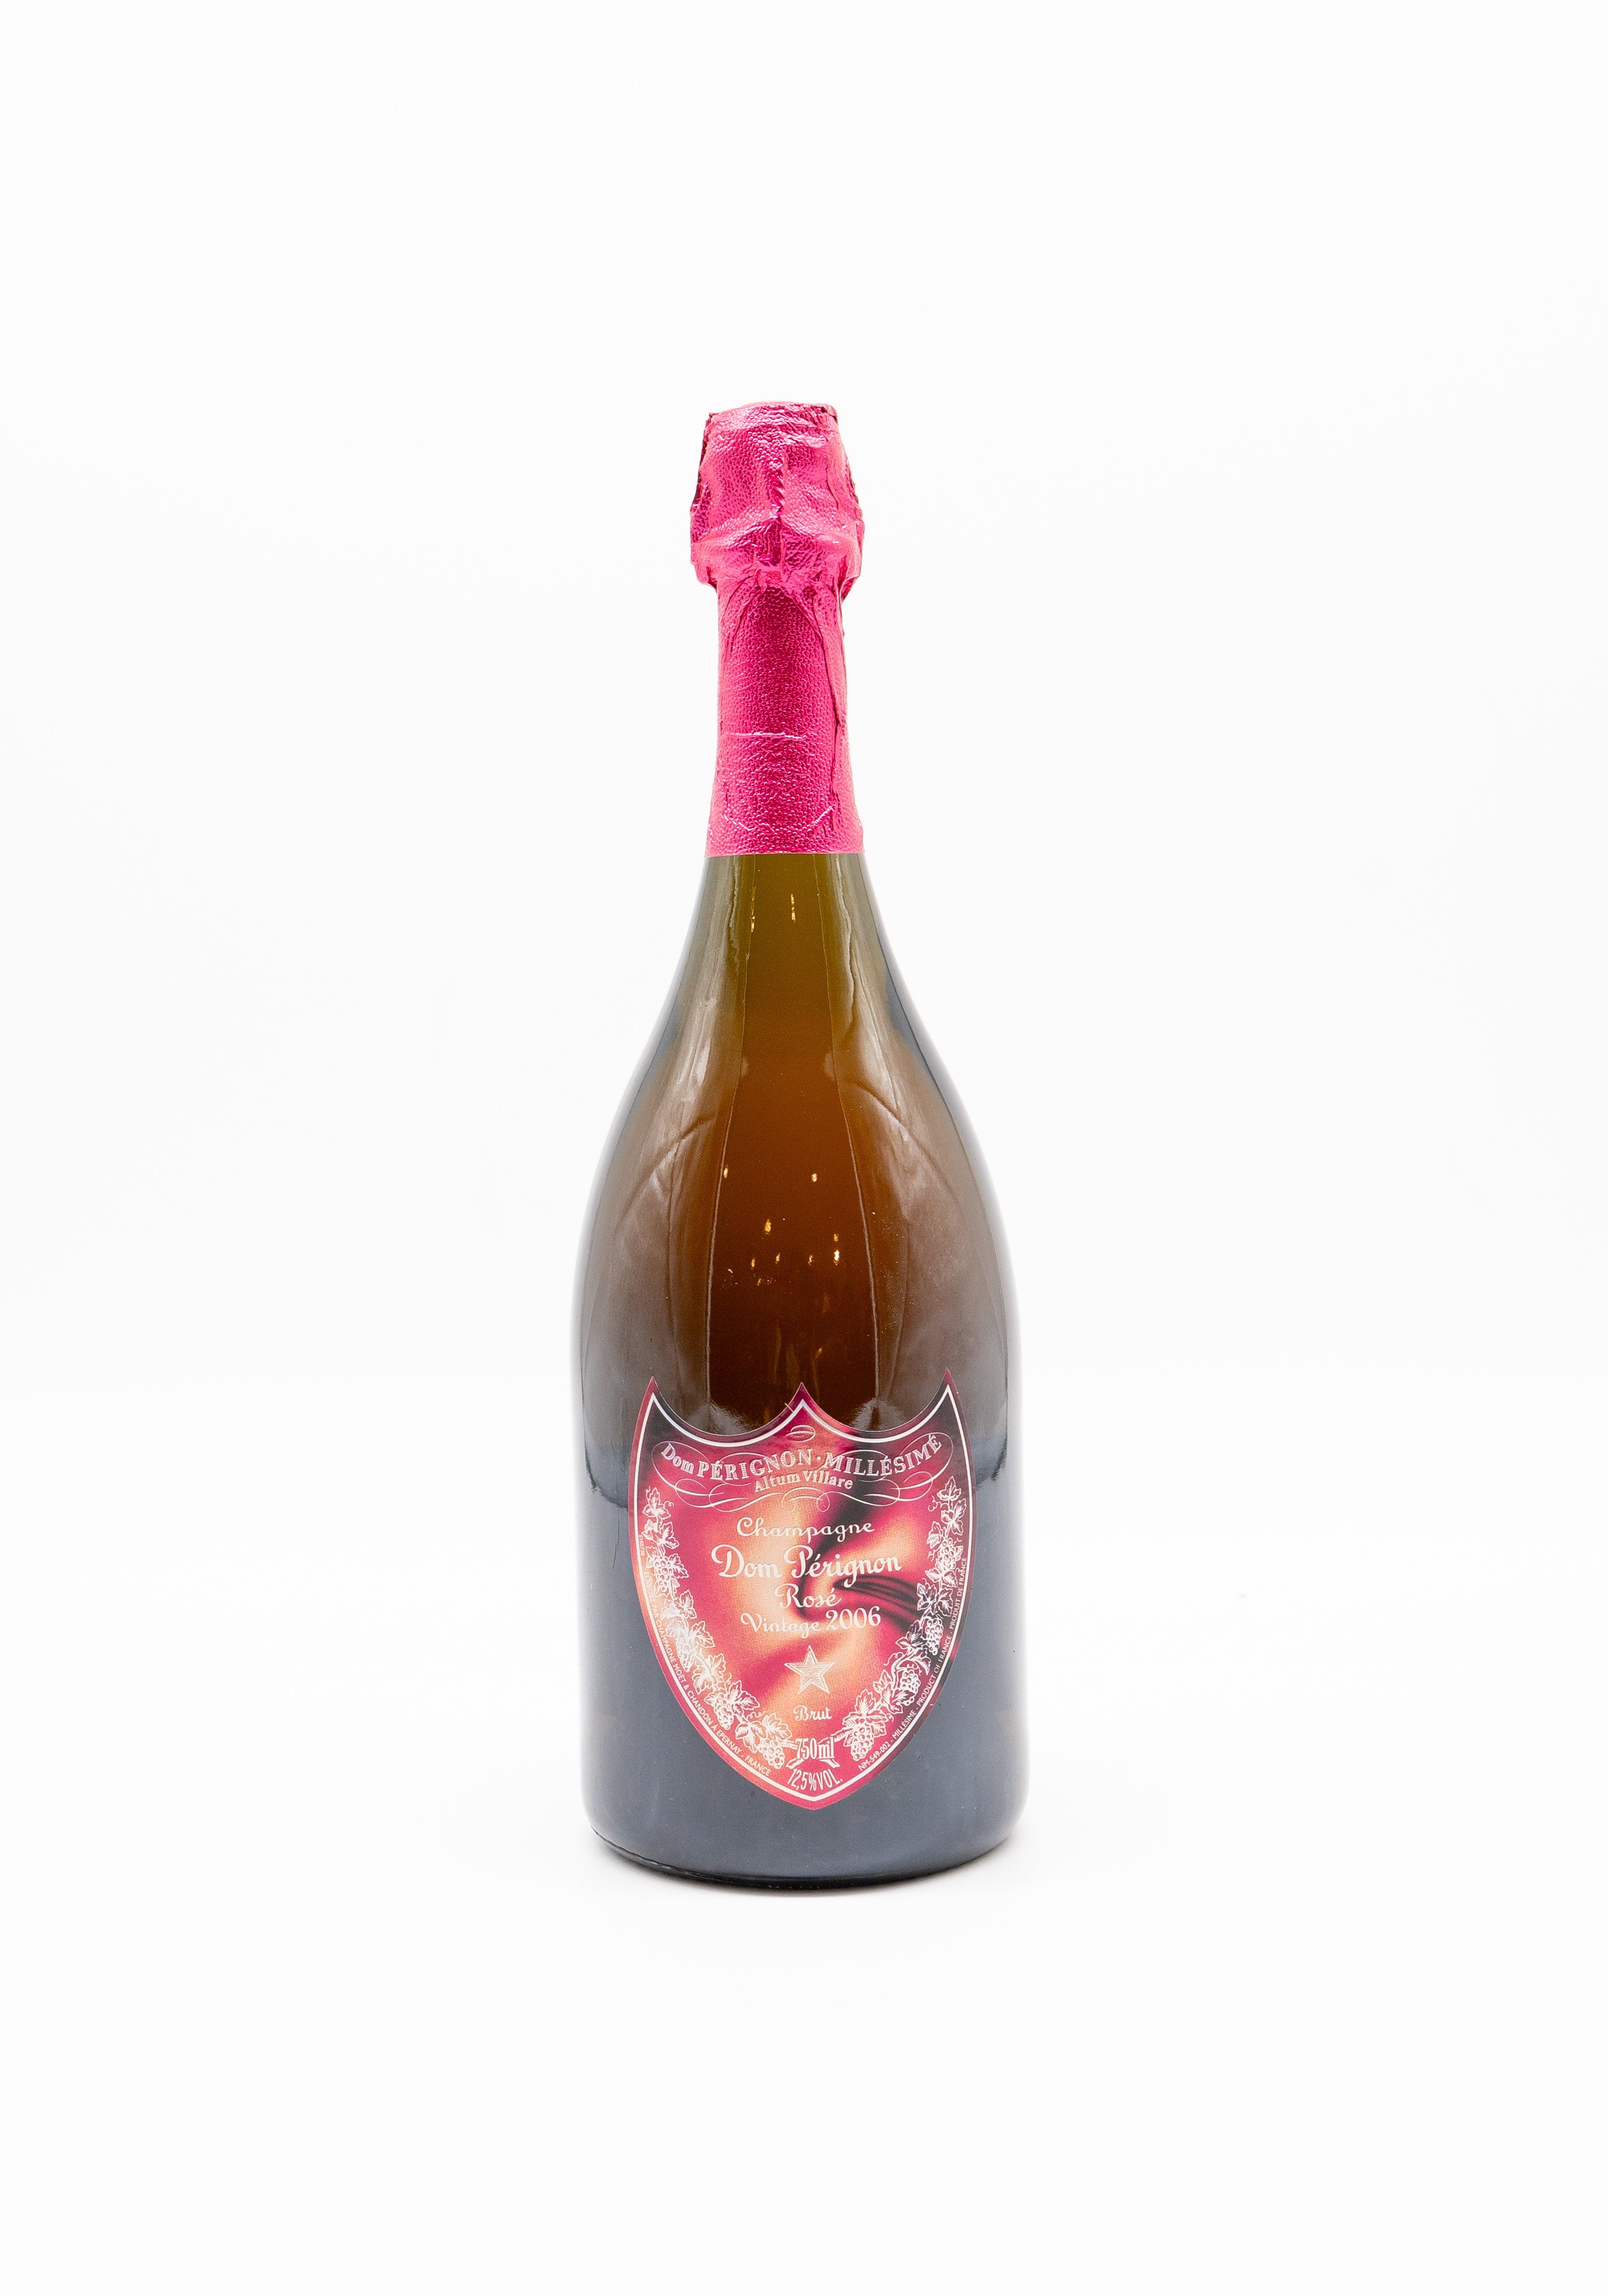 Champagne+Rosé+Dom+Perignon+Lady+Gaga+Vintage+2006